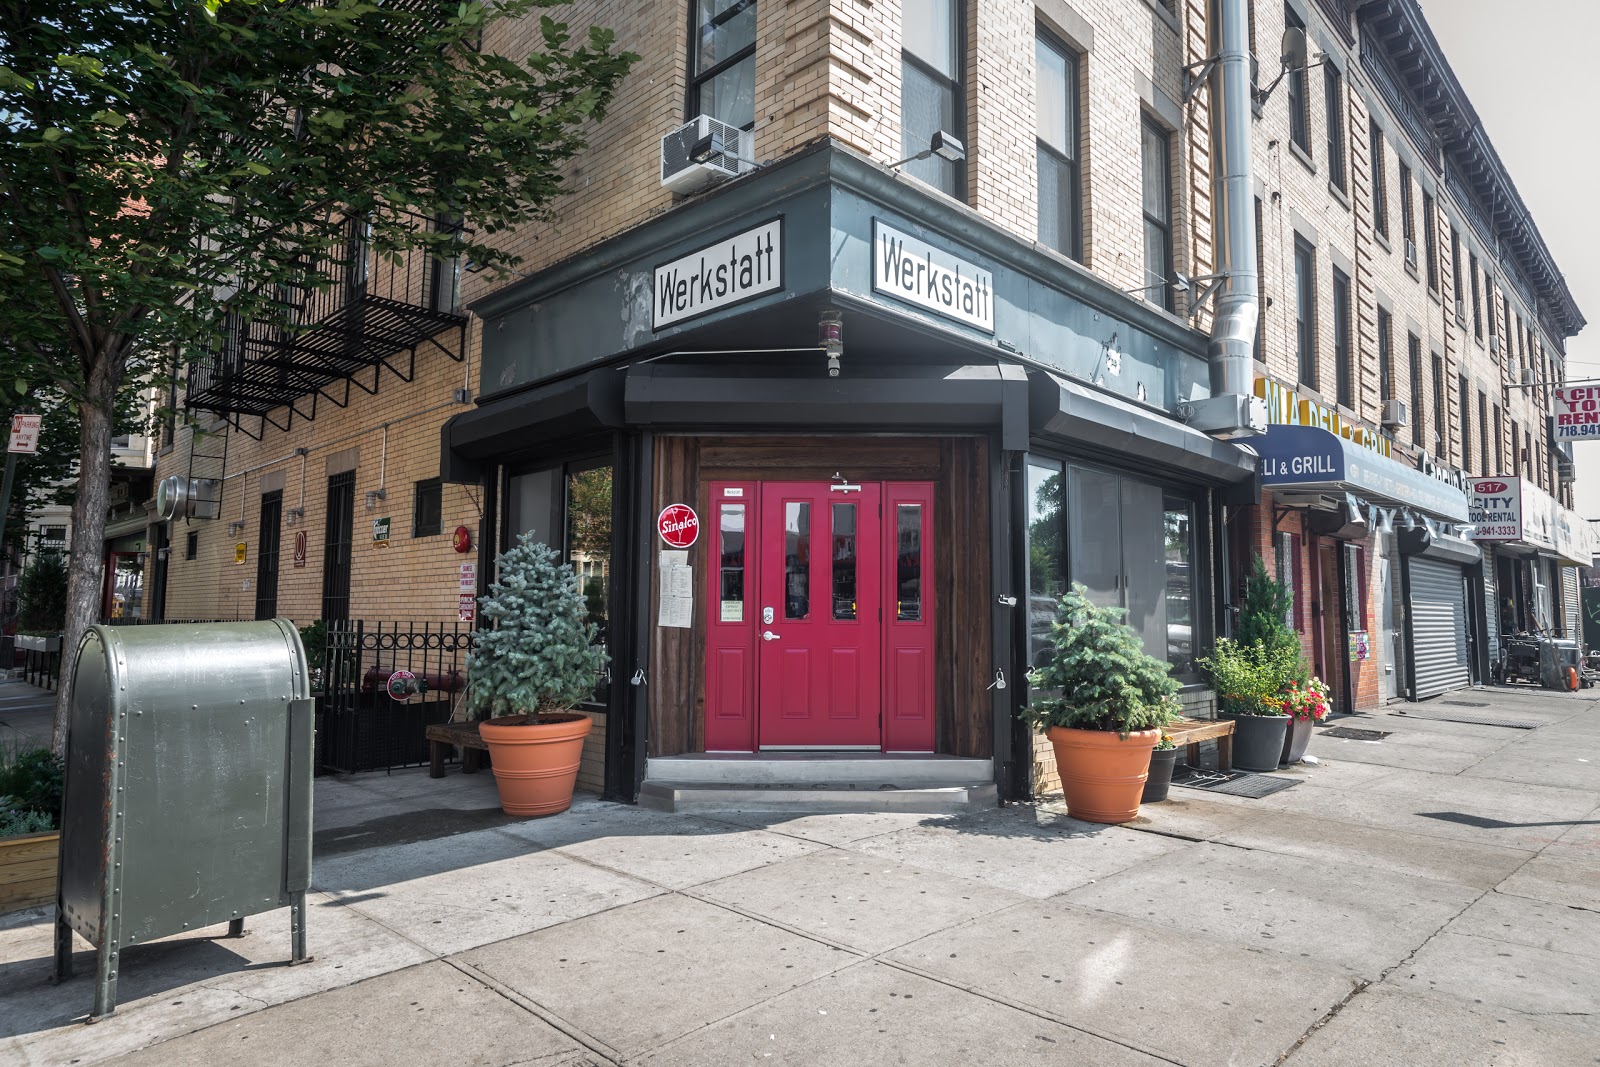 Photo of Werkstatt in Brooklyn City, New York, United States - 1 Picture of Restaurant, Food, Point of interest, Establishment